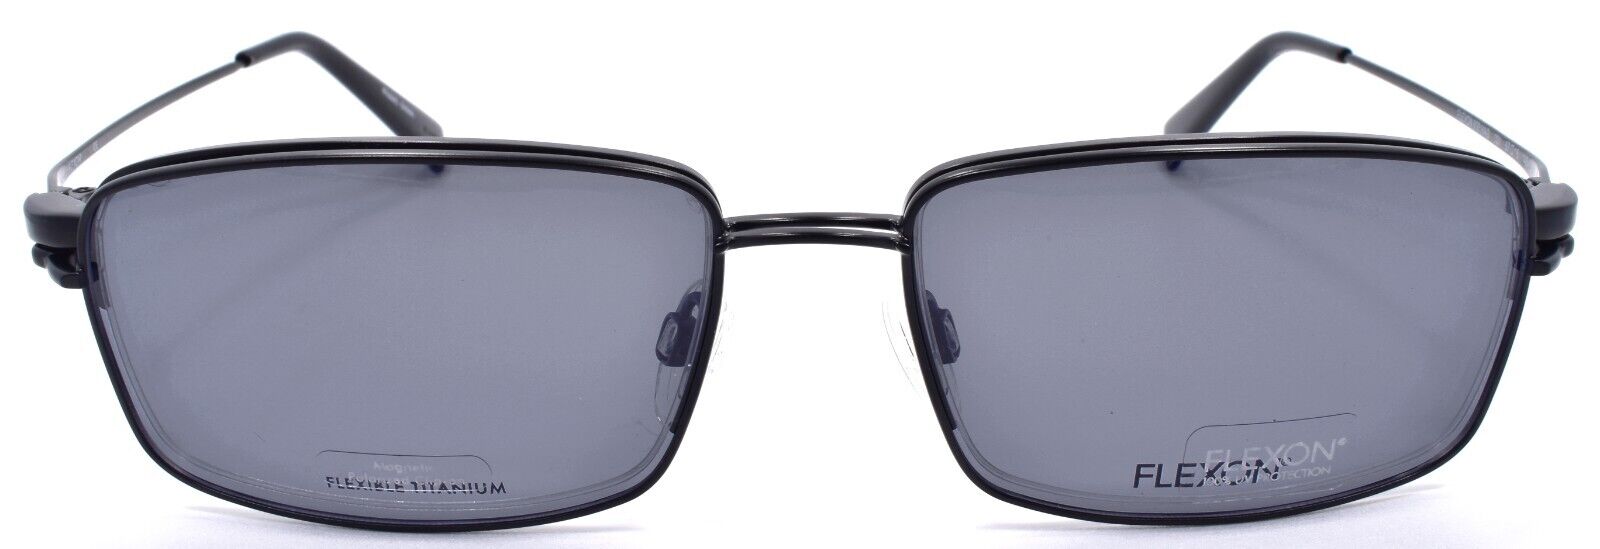 3-Flexon FLX 908 MAG 001 Men's Eyeglasses Black 57-18-145 + Clip On Sunglasses-883900204163-IKSpecs